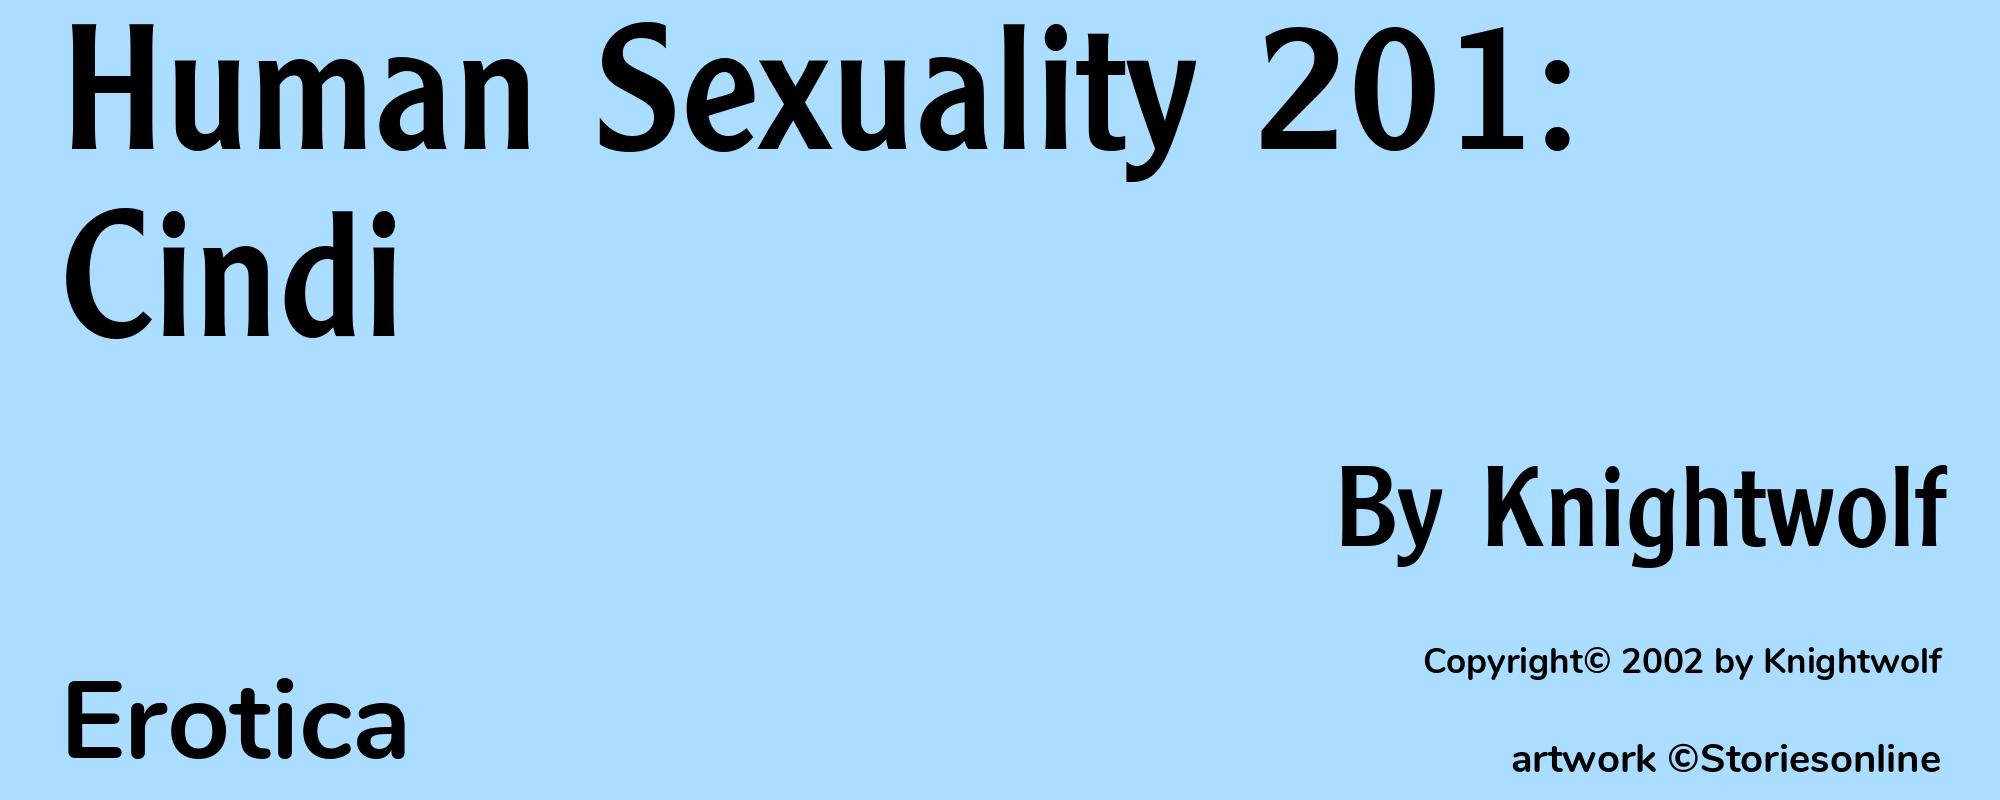 Human Sexuality 201: Cindi - Cover